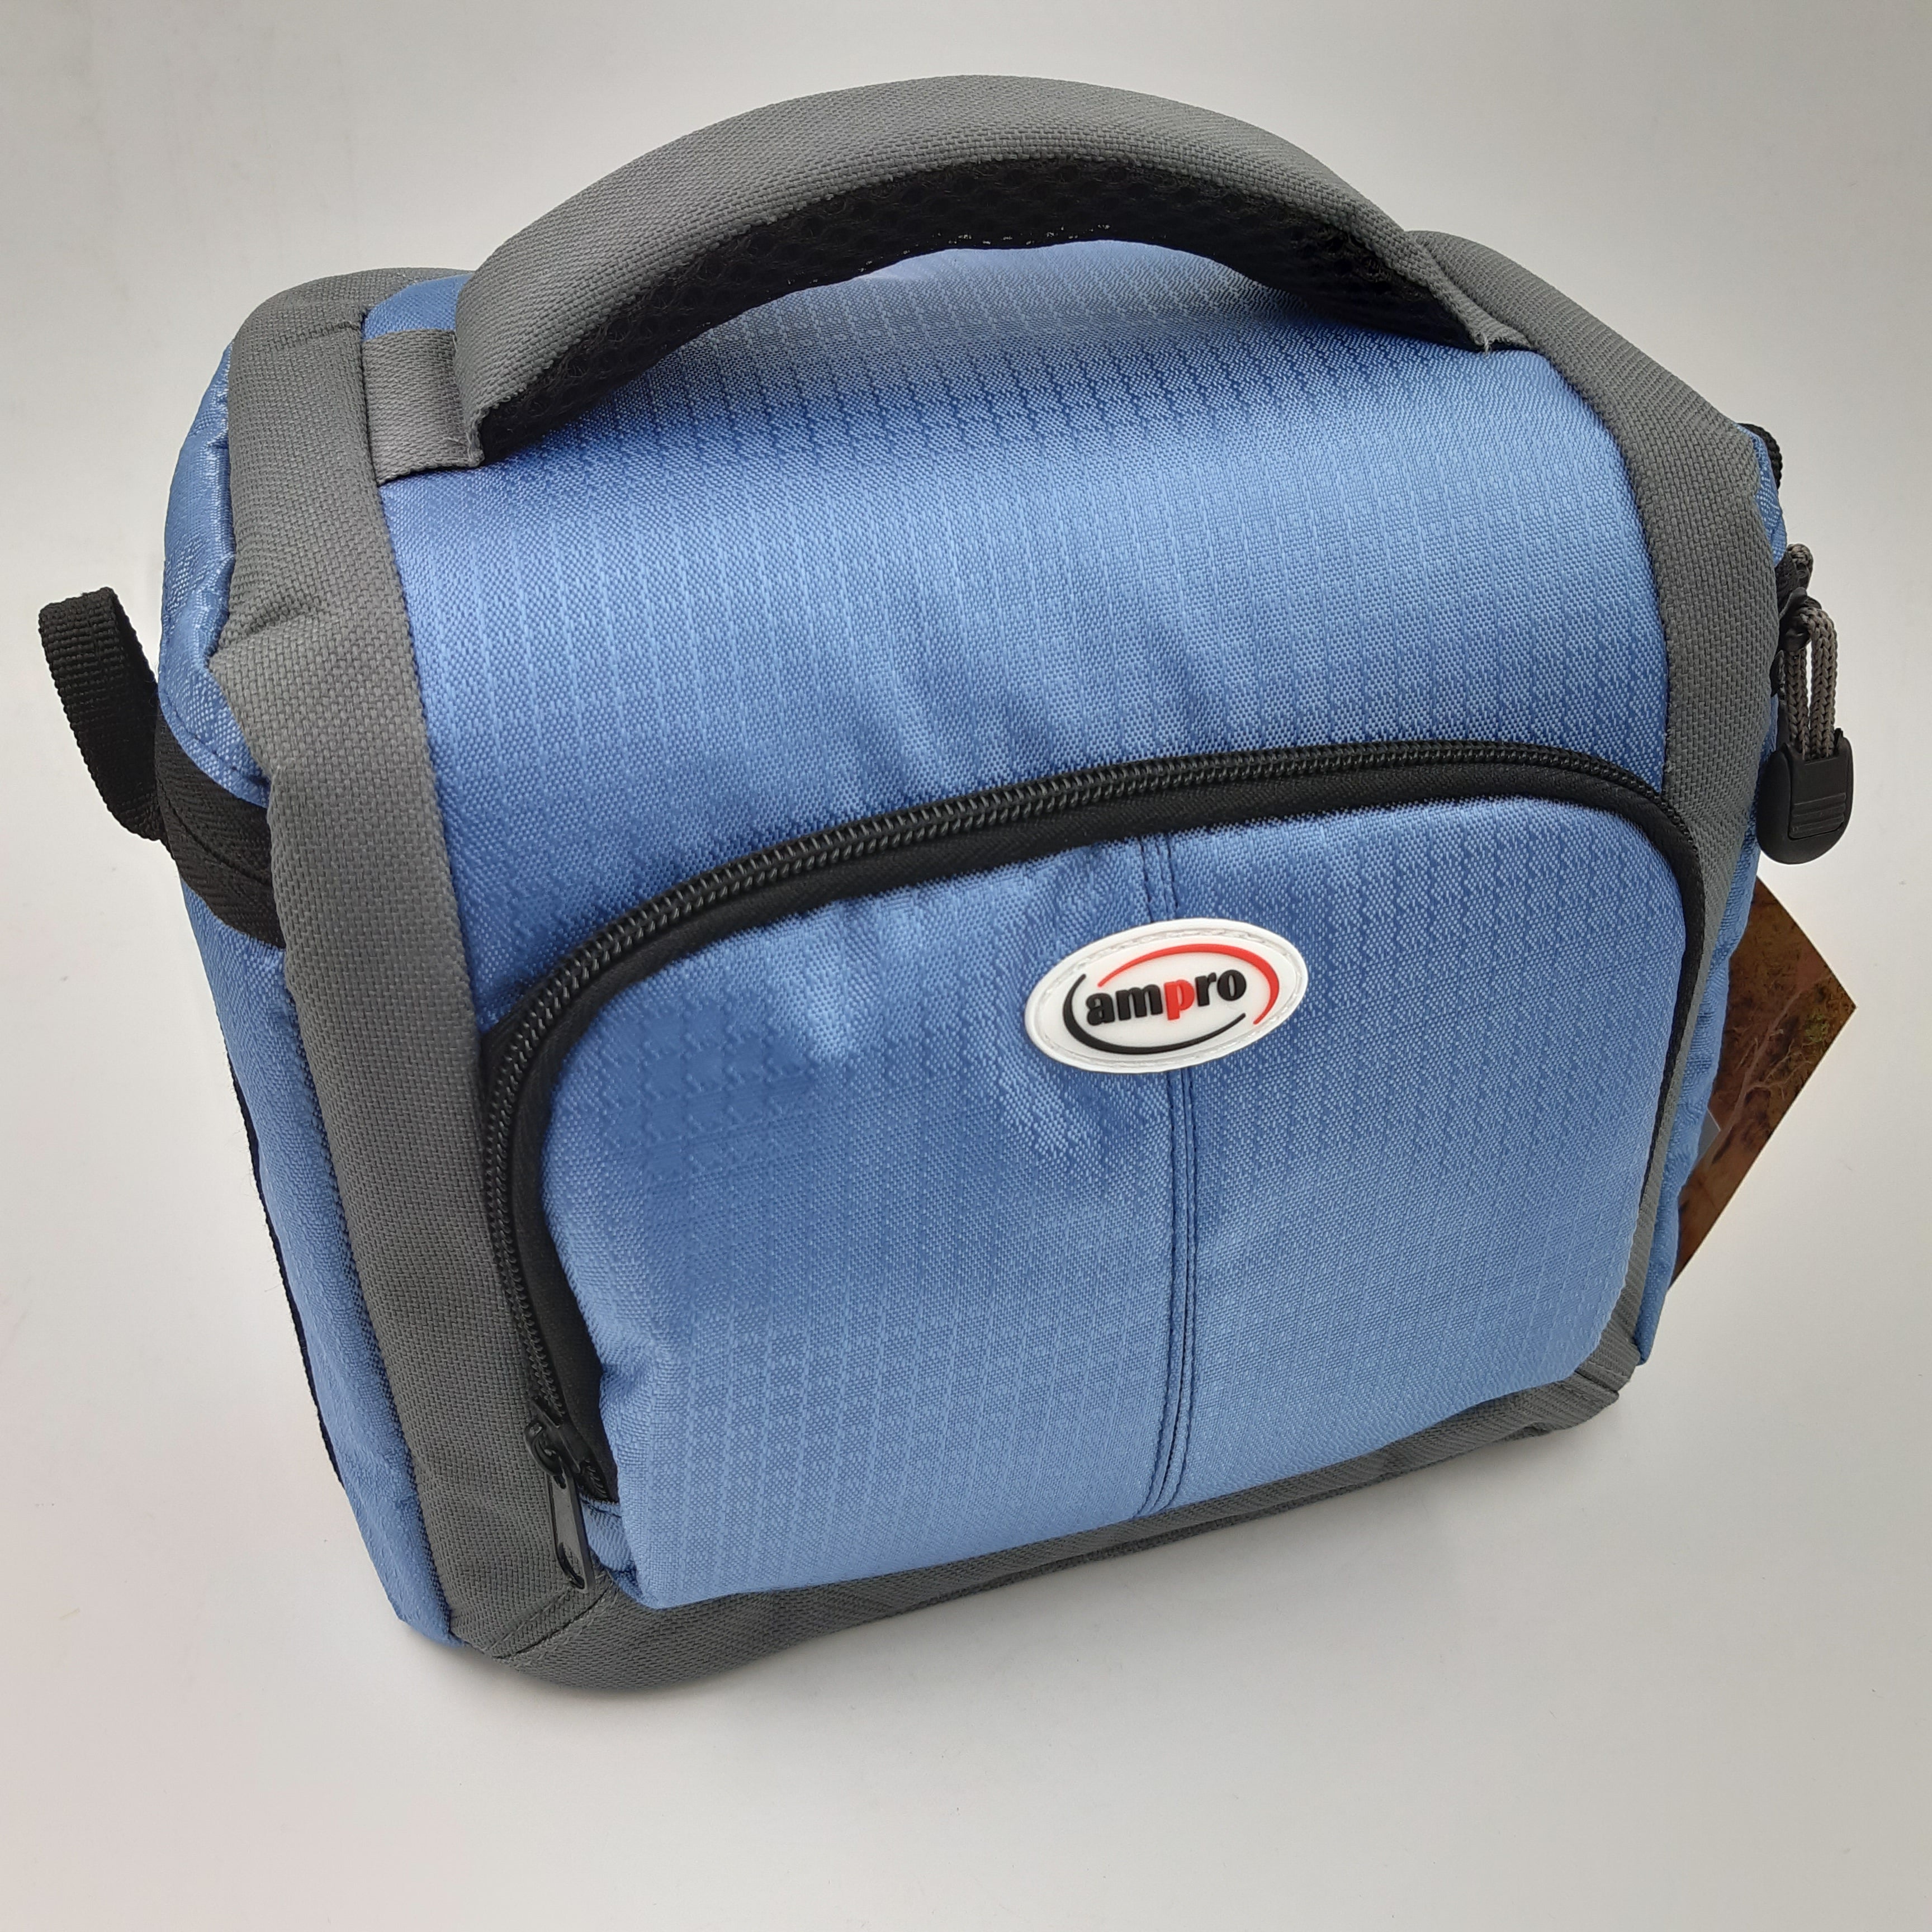 Ampro Mirage Medium Blue Gadget Bag Ampro Bag - Pouch